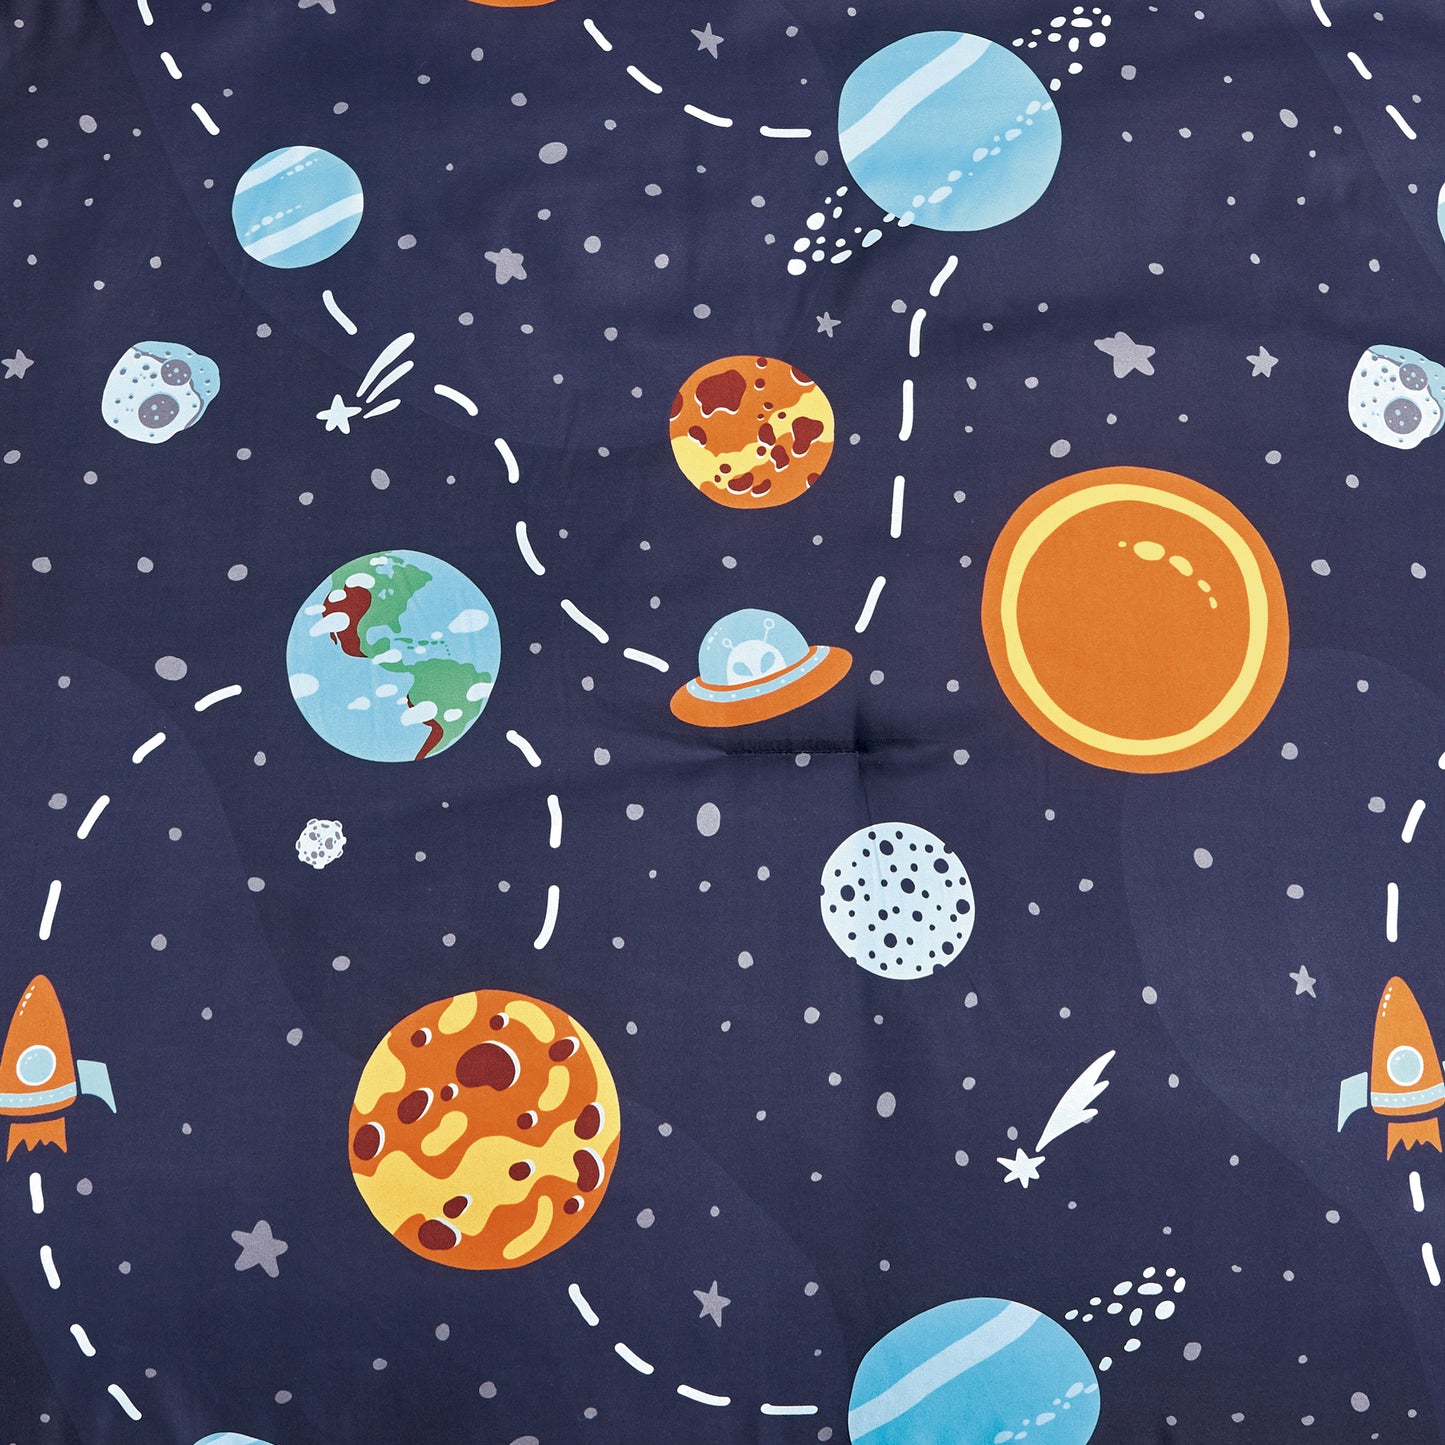 Universe Space Galaxy UFO Kids Microfiber Printed Comforter Set with Plush Pillow